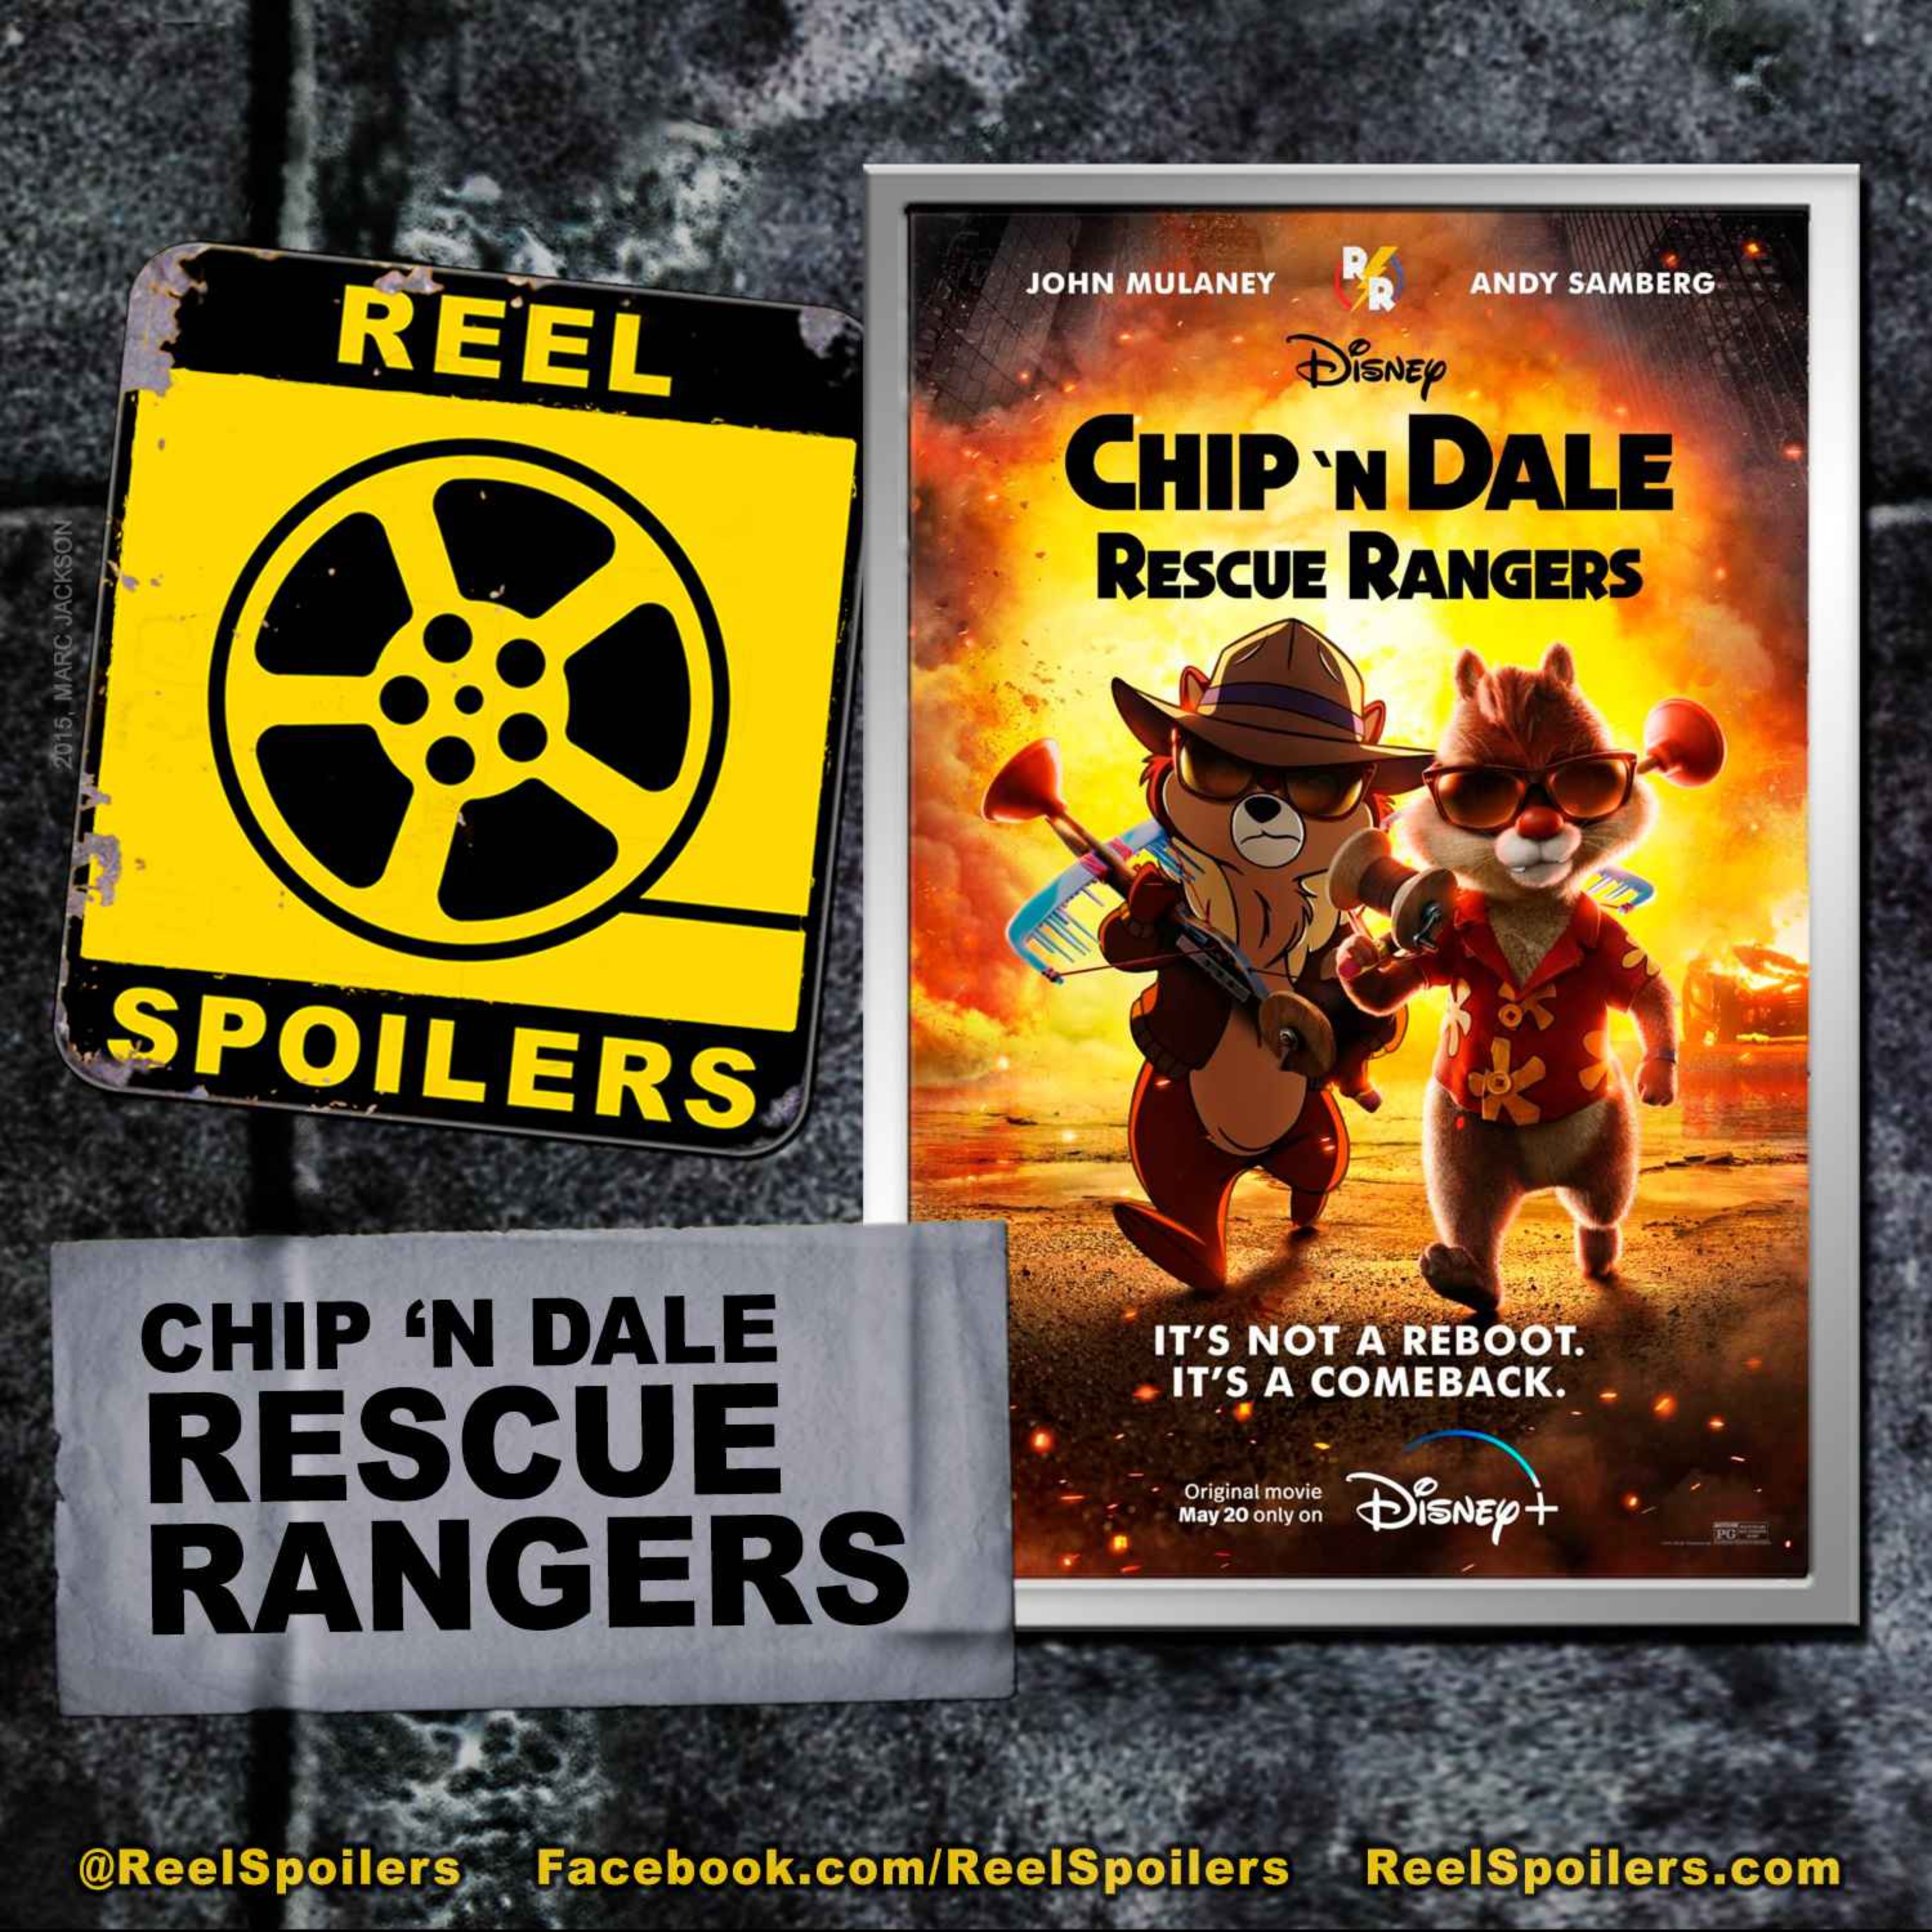 CHIP 'N DALE RESCUE RANGERS Starring John Mullaney, Andy Samberg Image